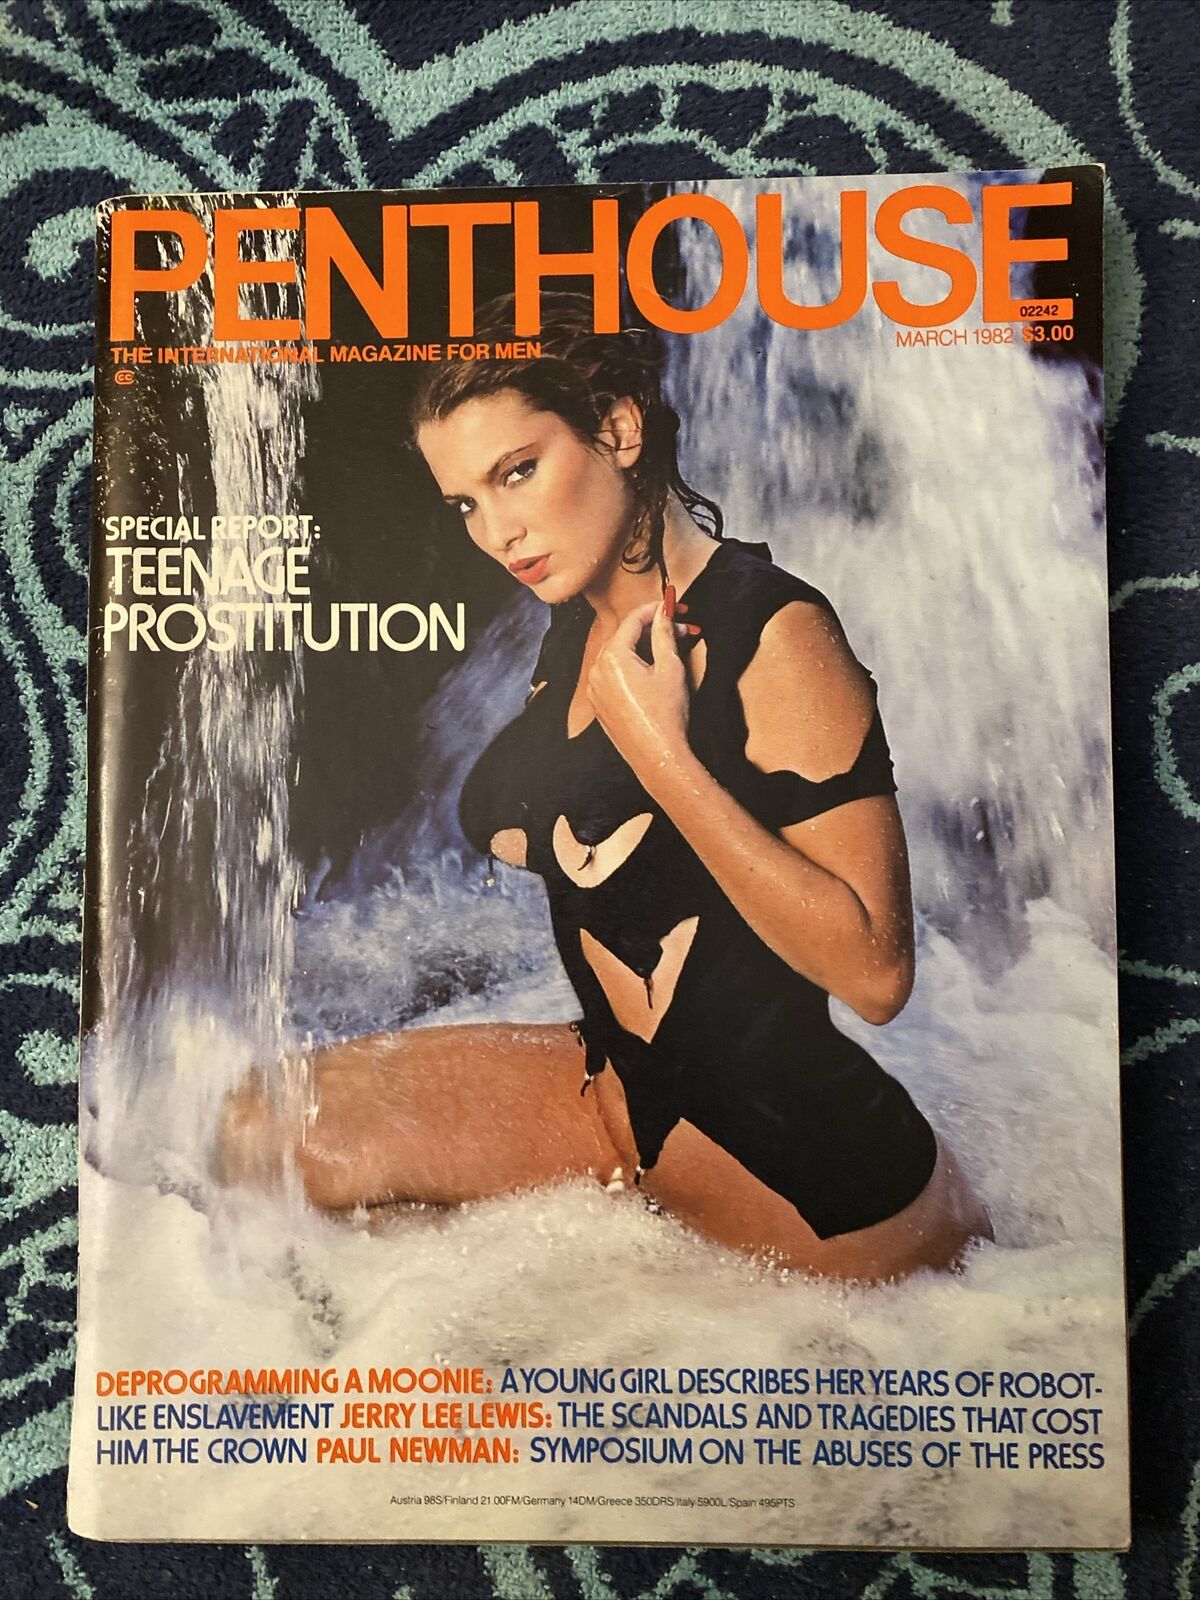 Penthouse Magazine March 1982 - POTM Pet of The Month Sharon Axley